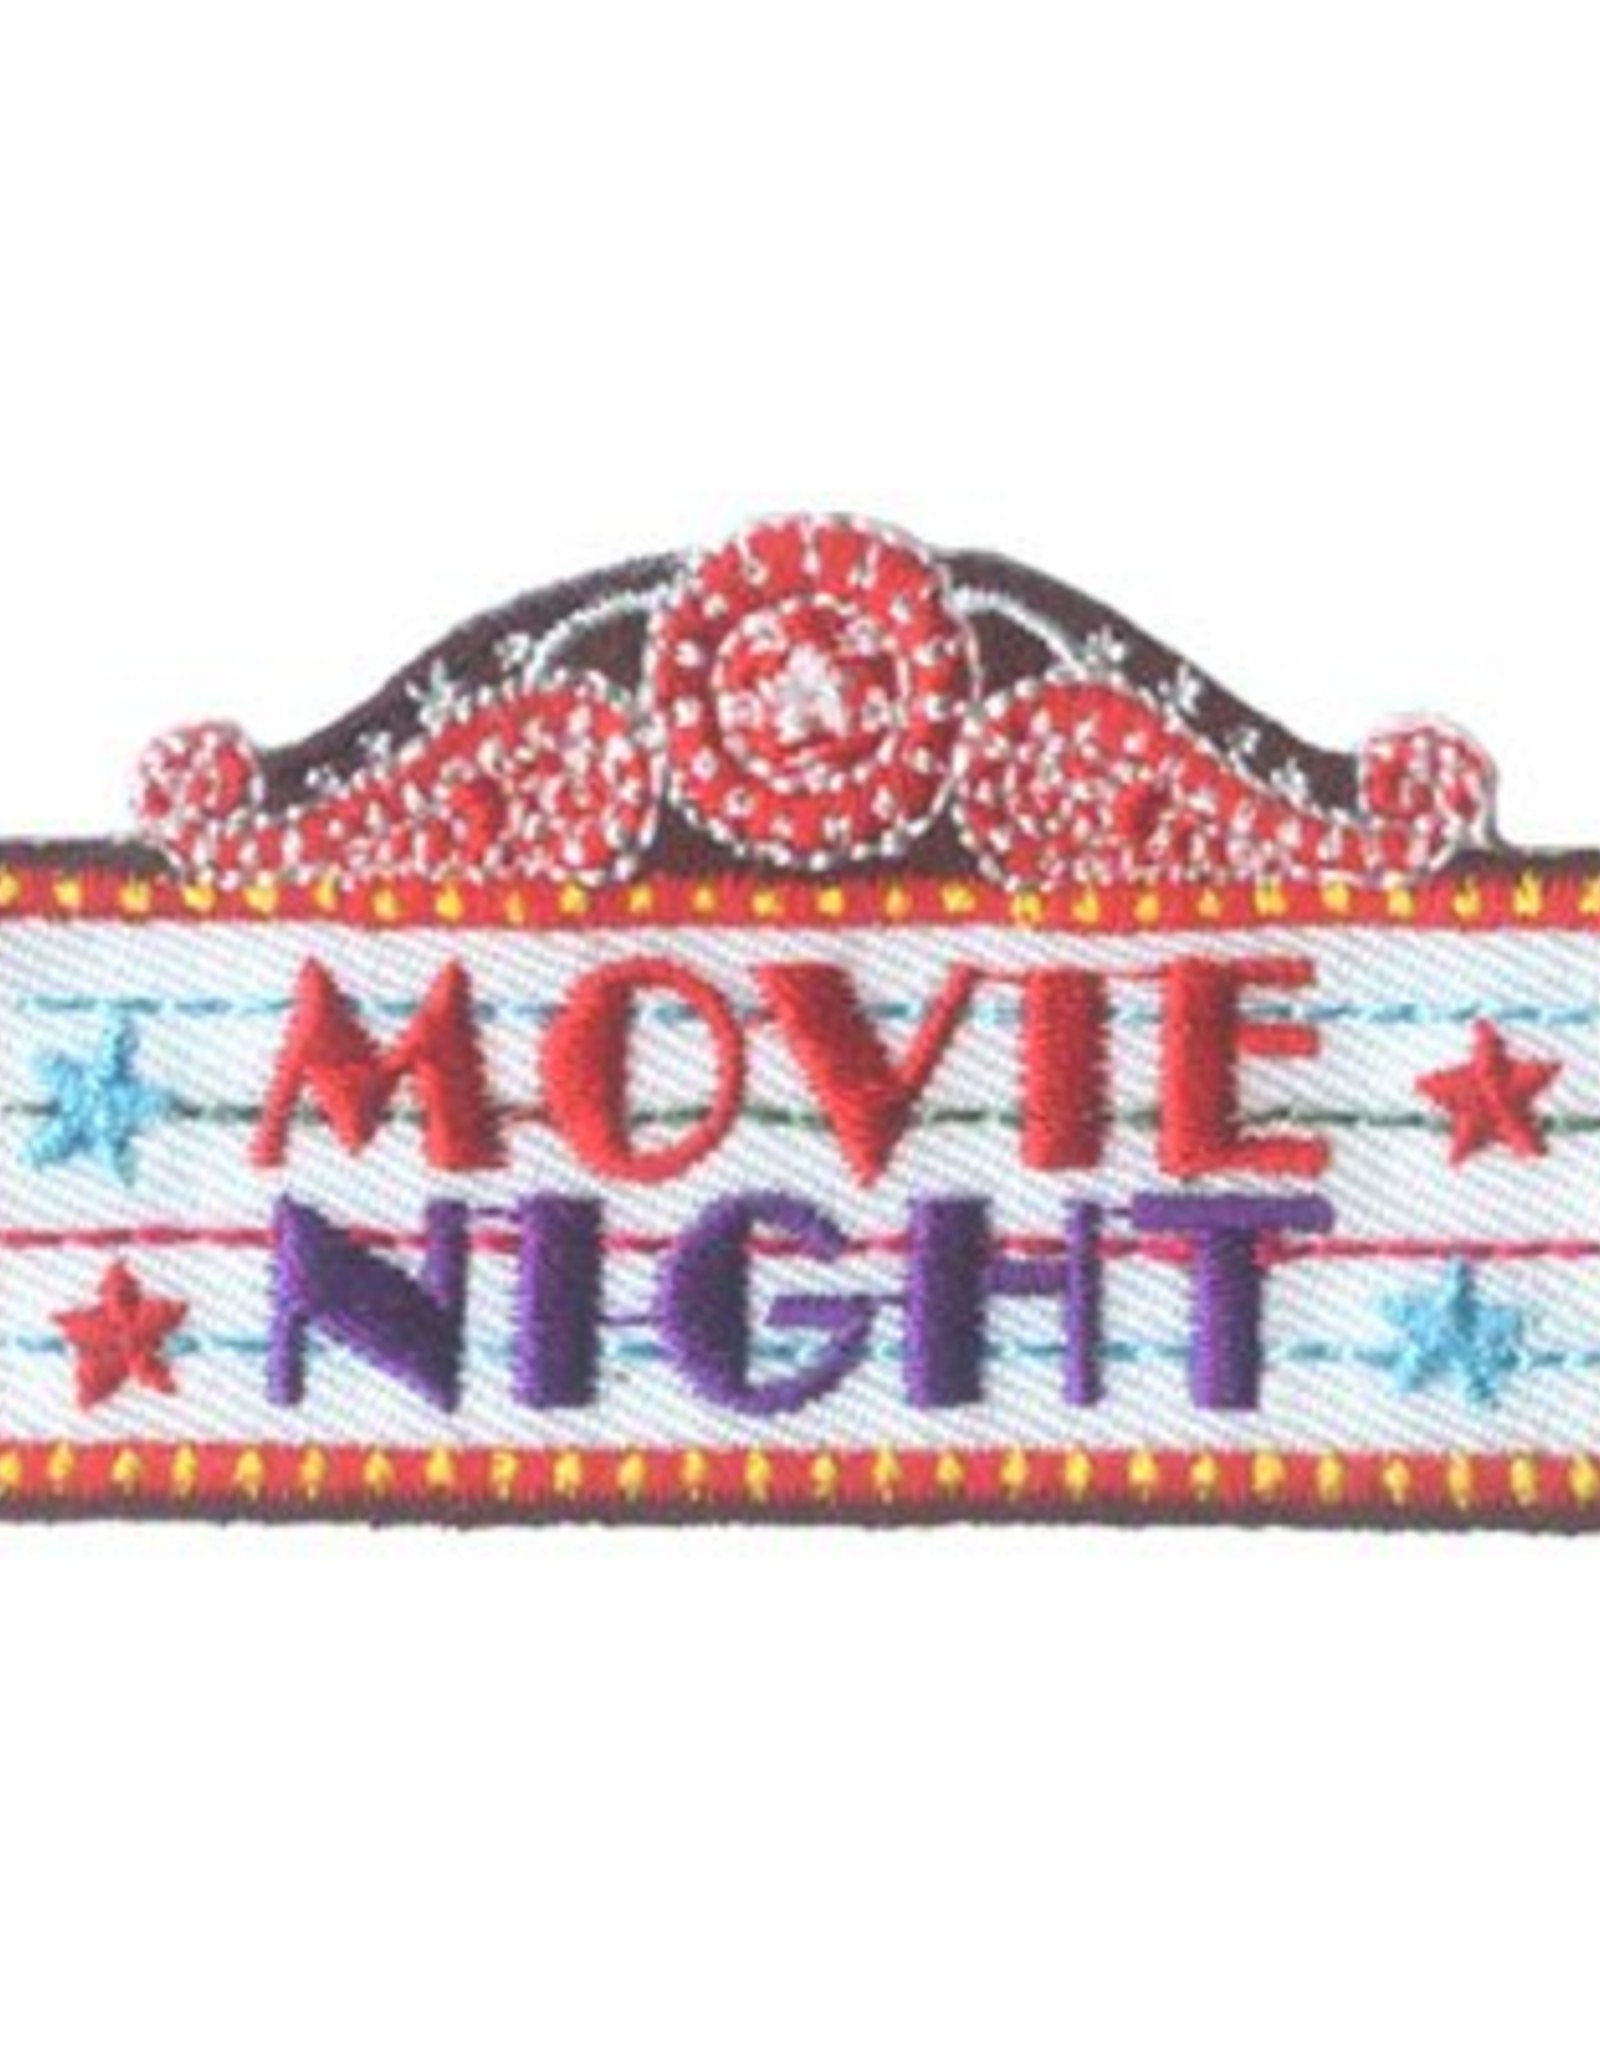 Advantage Emblem & Screen Prnt *Movie Night Fun Patch